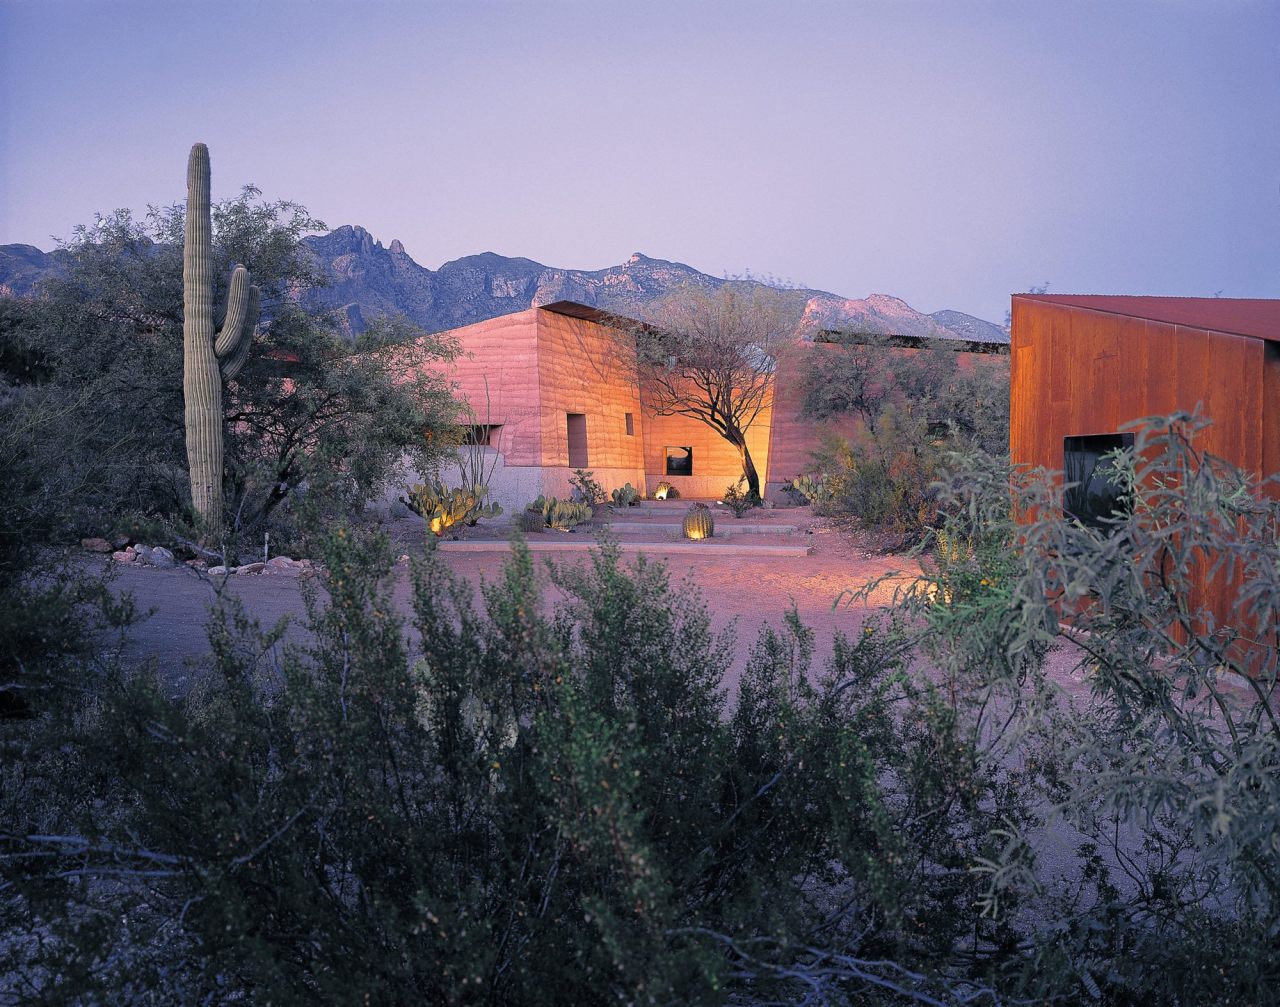 And saw the skull beneath the skin. - Catalina House, Rick Joy, Tucson